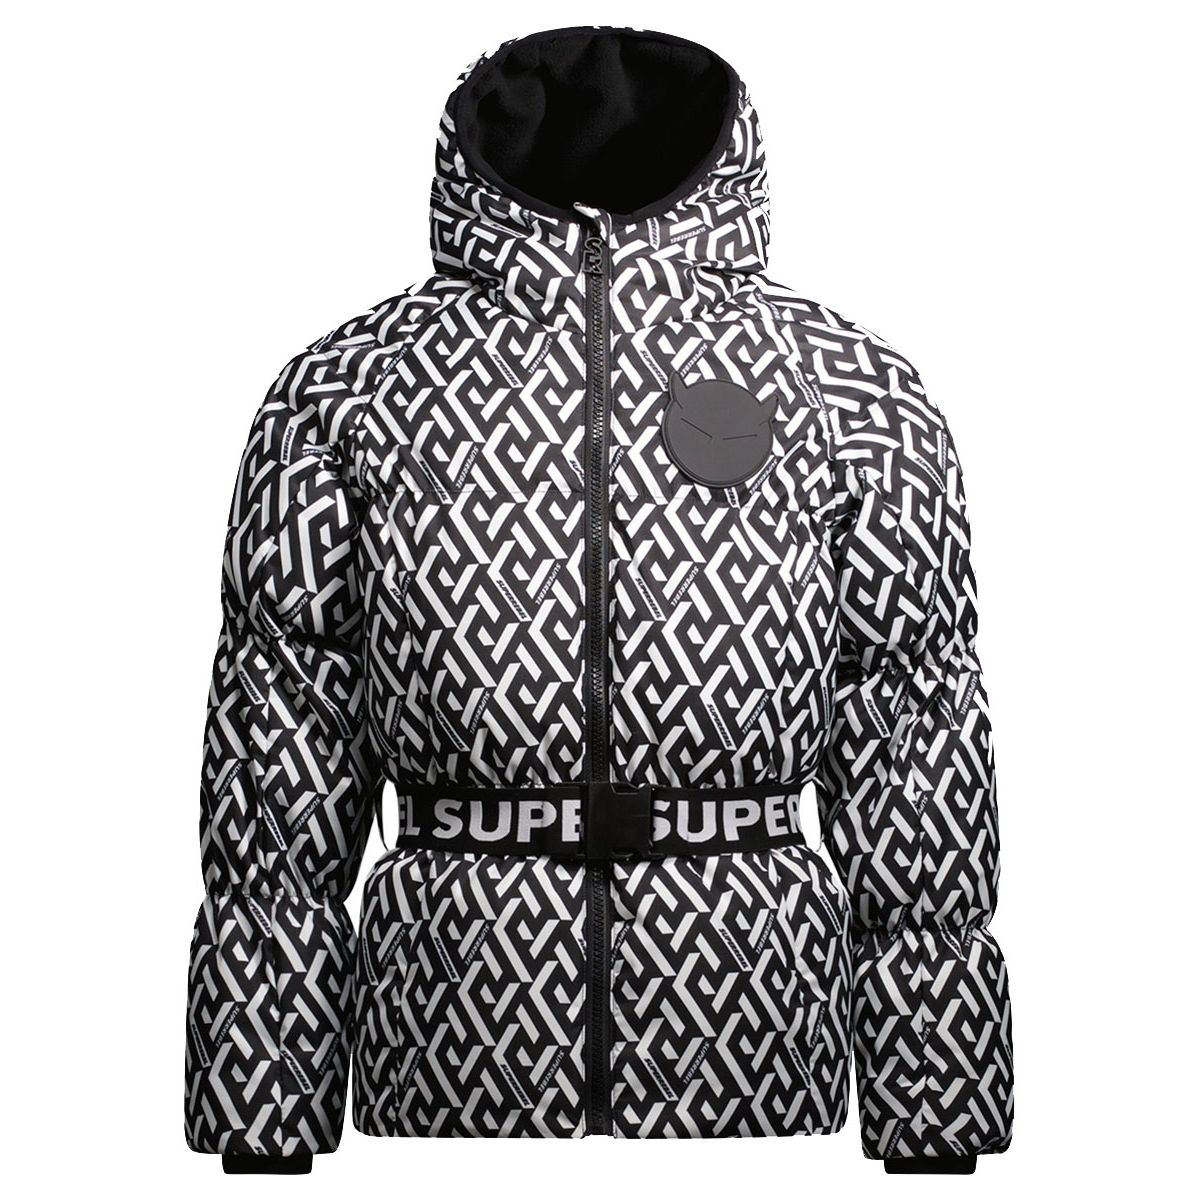  Ski & Snow Jackets -  superrebel PUFF Ski Jacket R309-5204